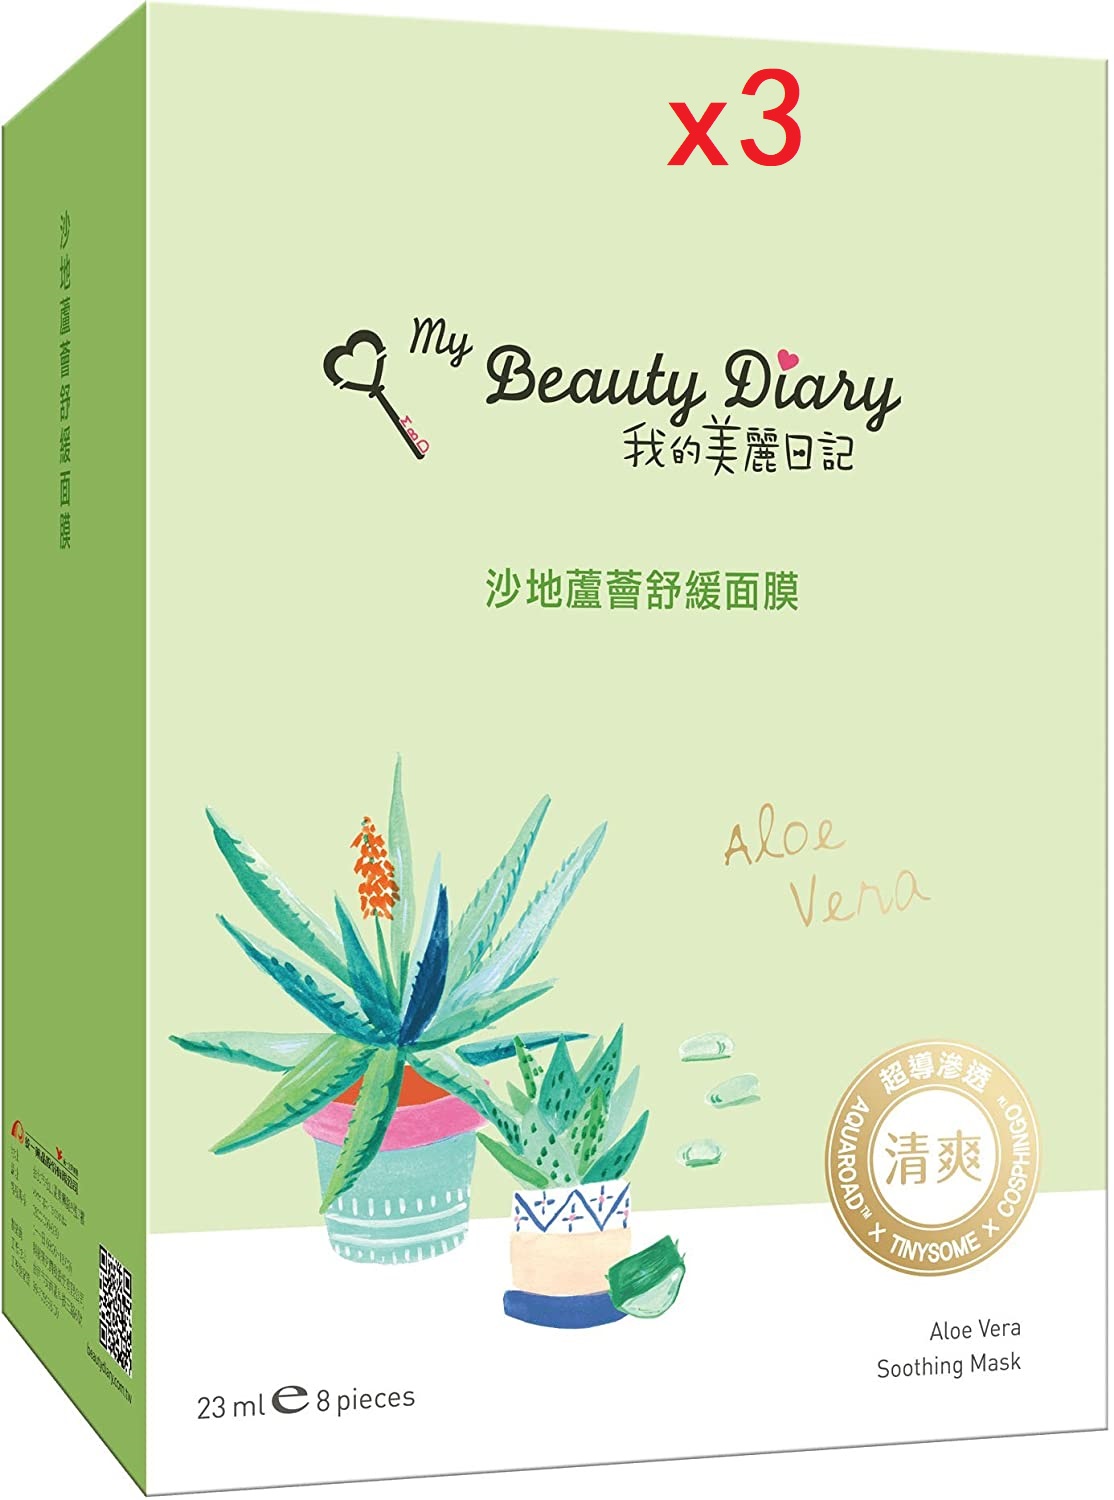 My Beauty Diary Mask - Aloe Vera Soothing (Optimal Hydration) 8pcs Pack 3